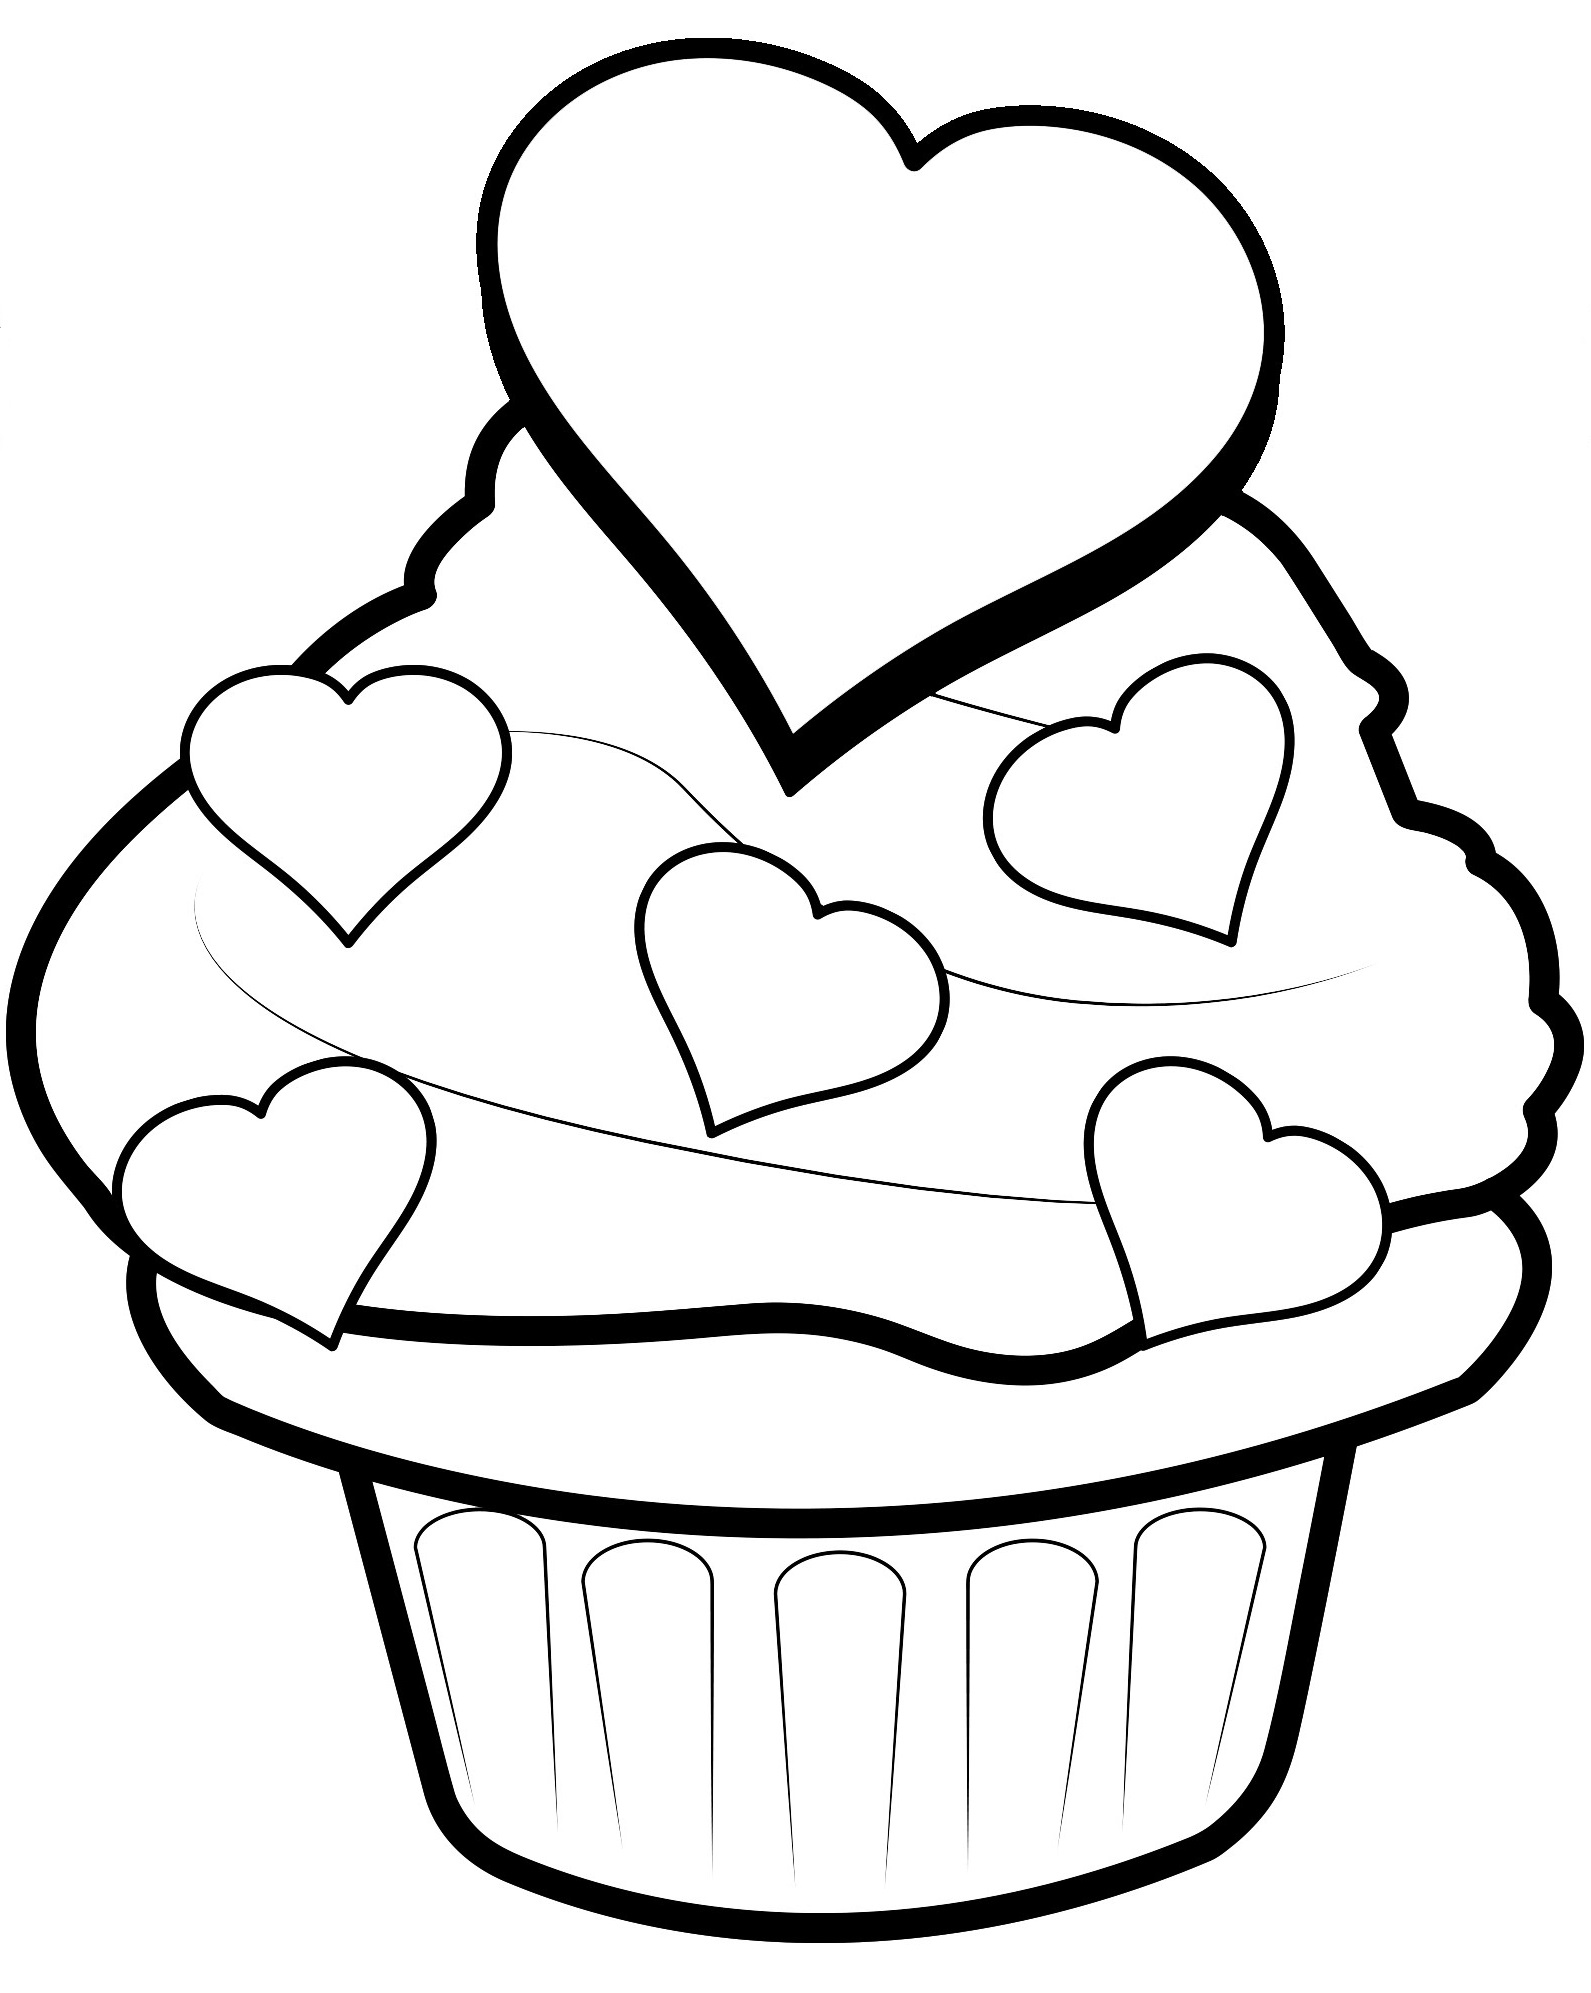 hearts-cupcake.jpg